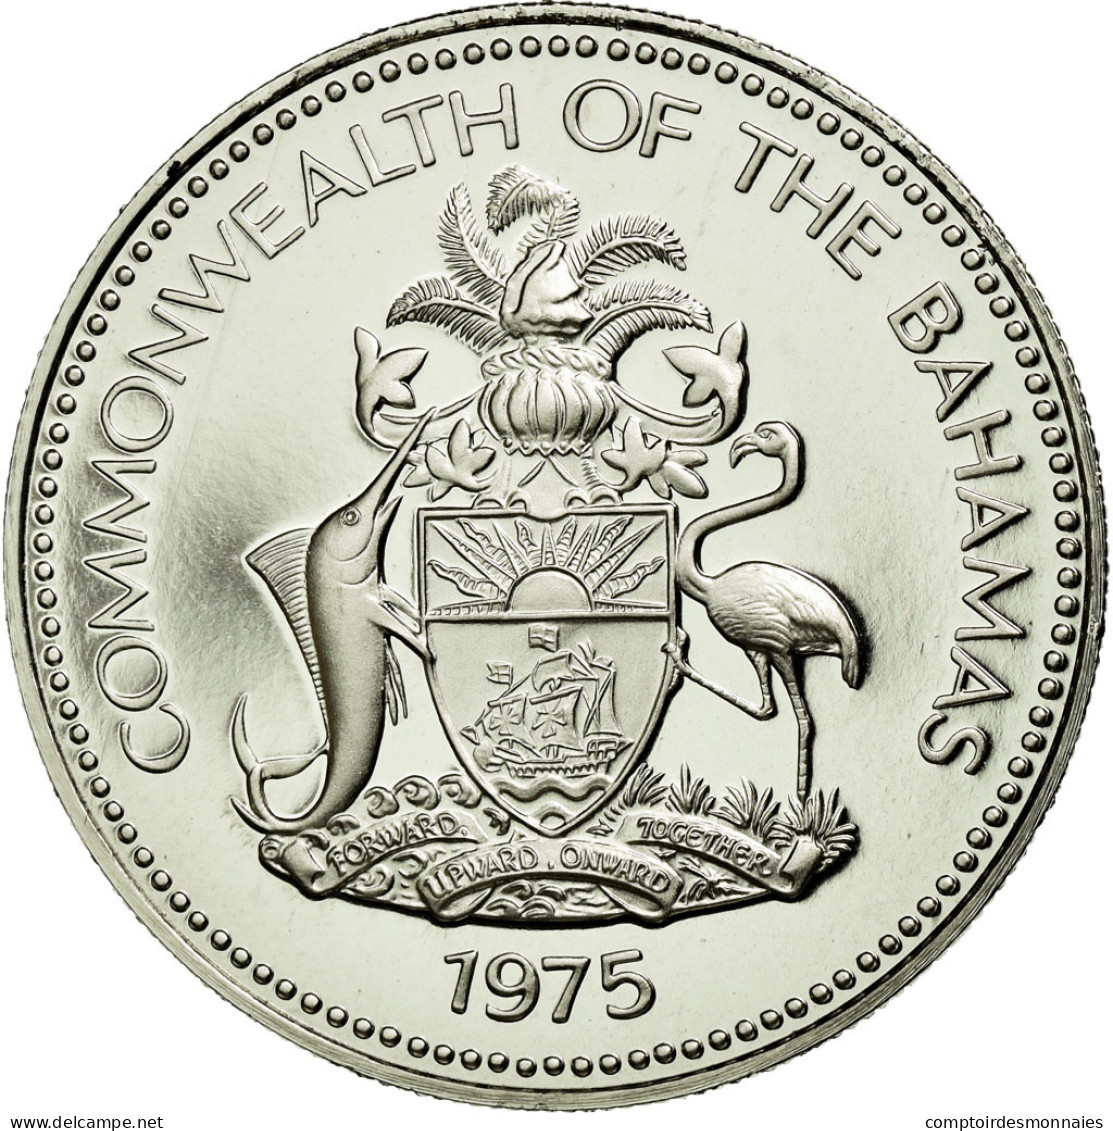 Monnaie, Bahamas, Elizabeth II, 25 Cents, 1975, Franklin Mint, U.S.A., FDC - Bahamas